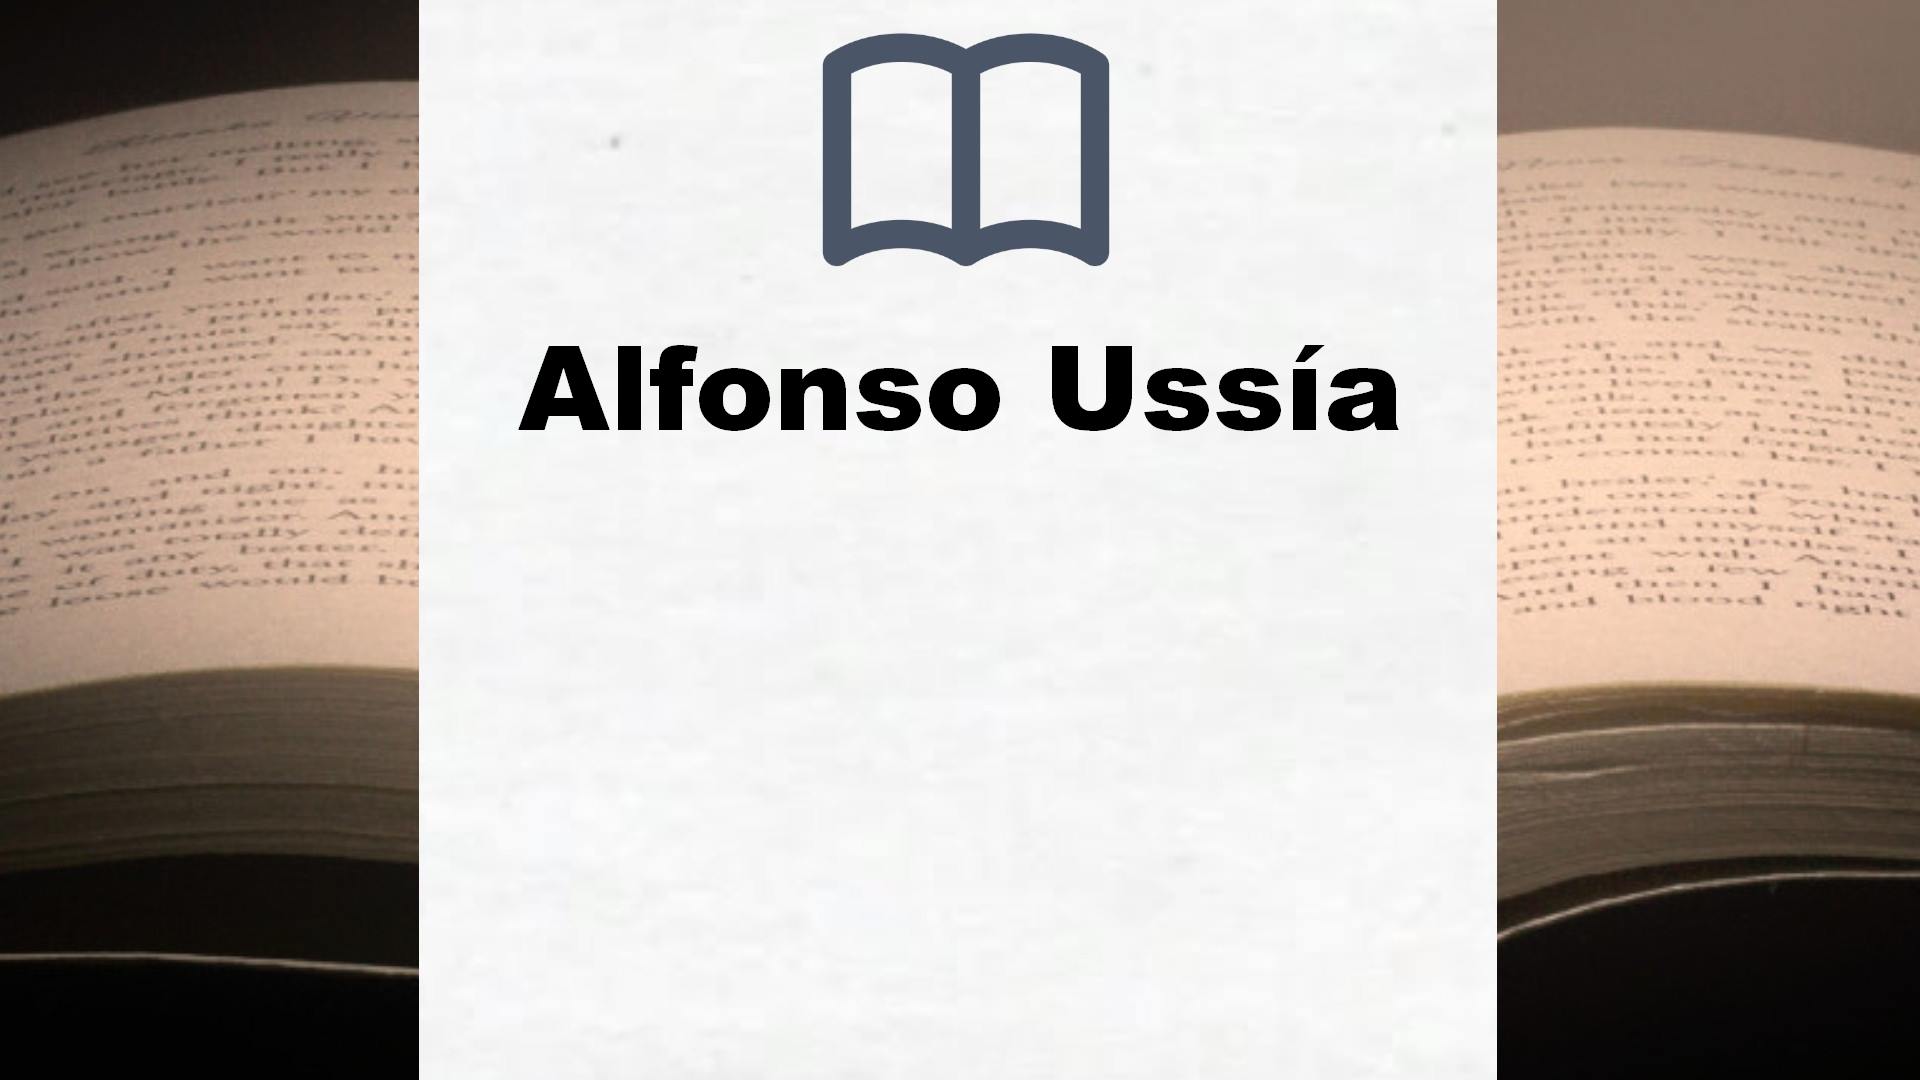 Libros Alfonso Ussía